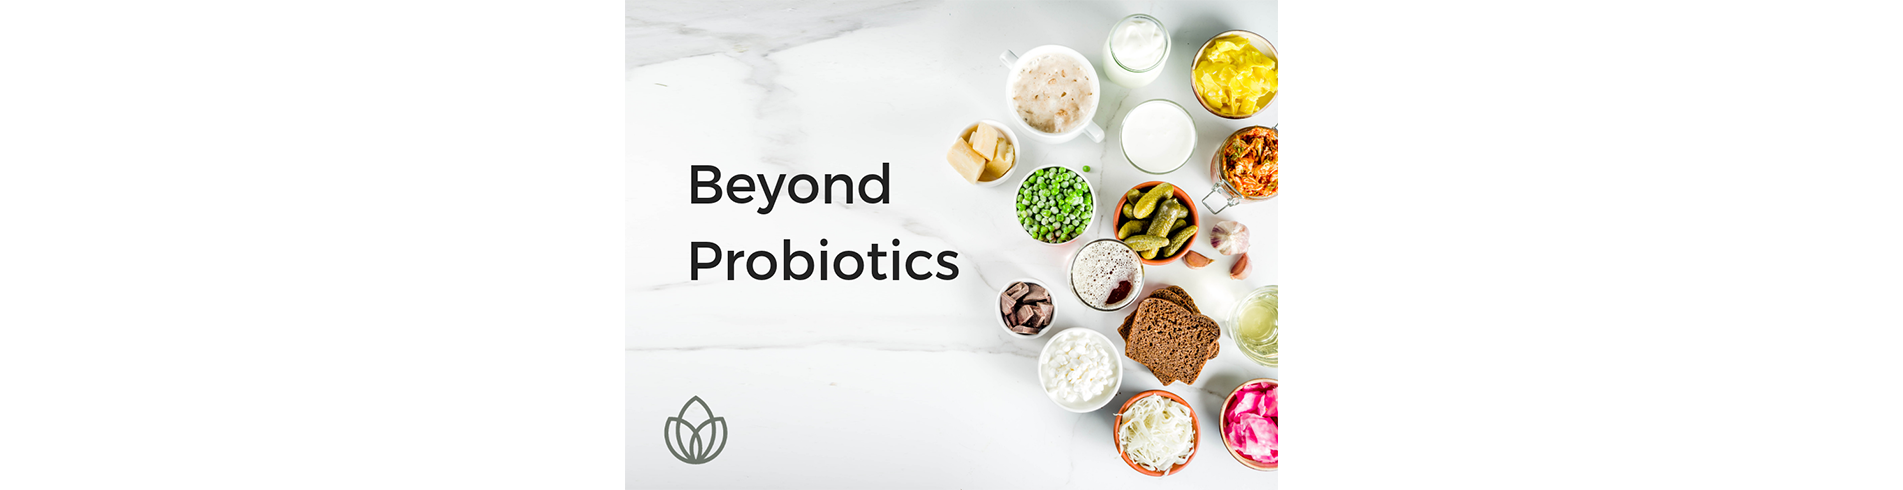 Beyond Probiotics – From Kombucha to Kimchi